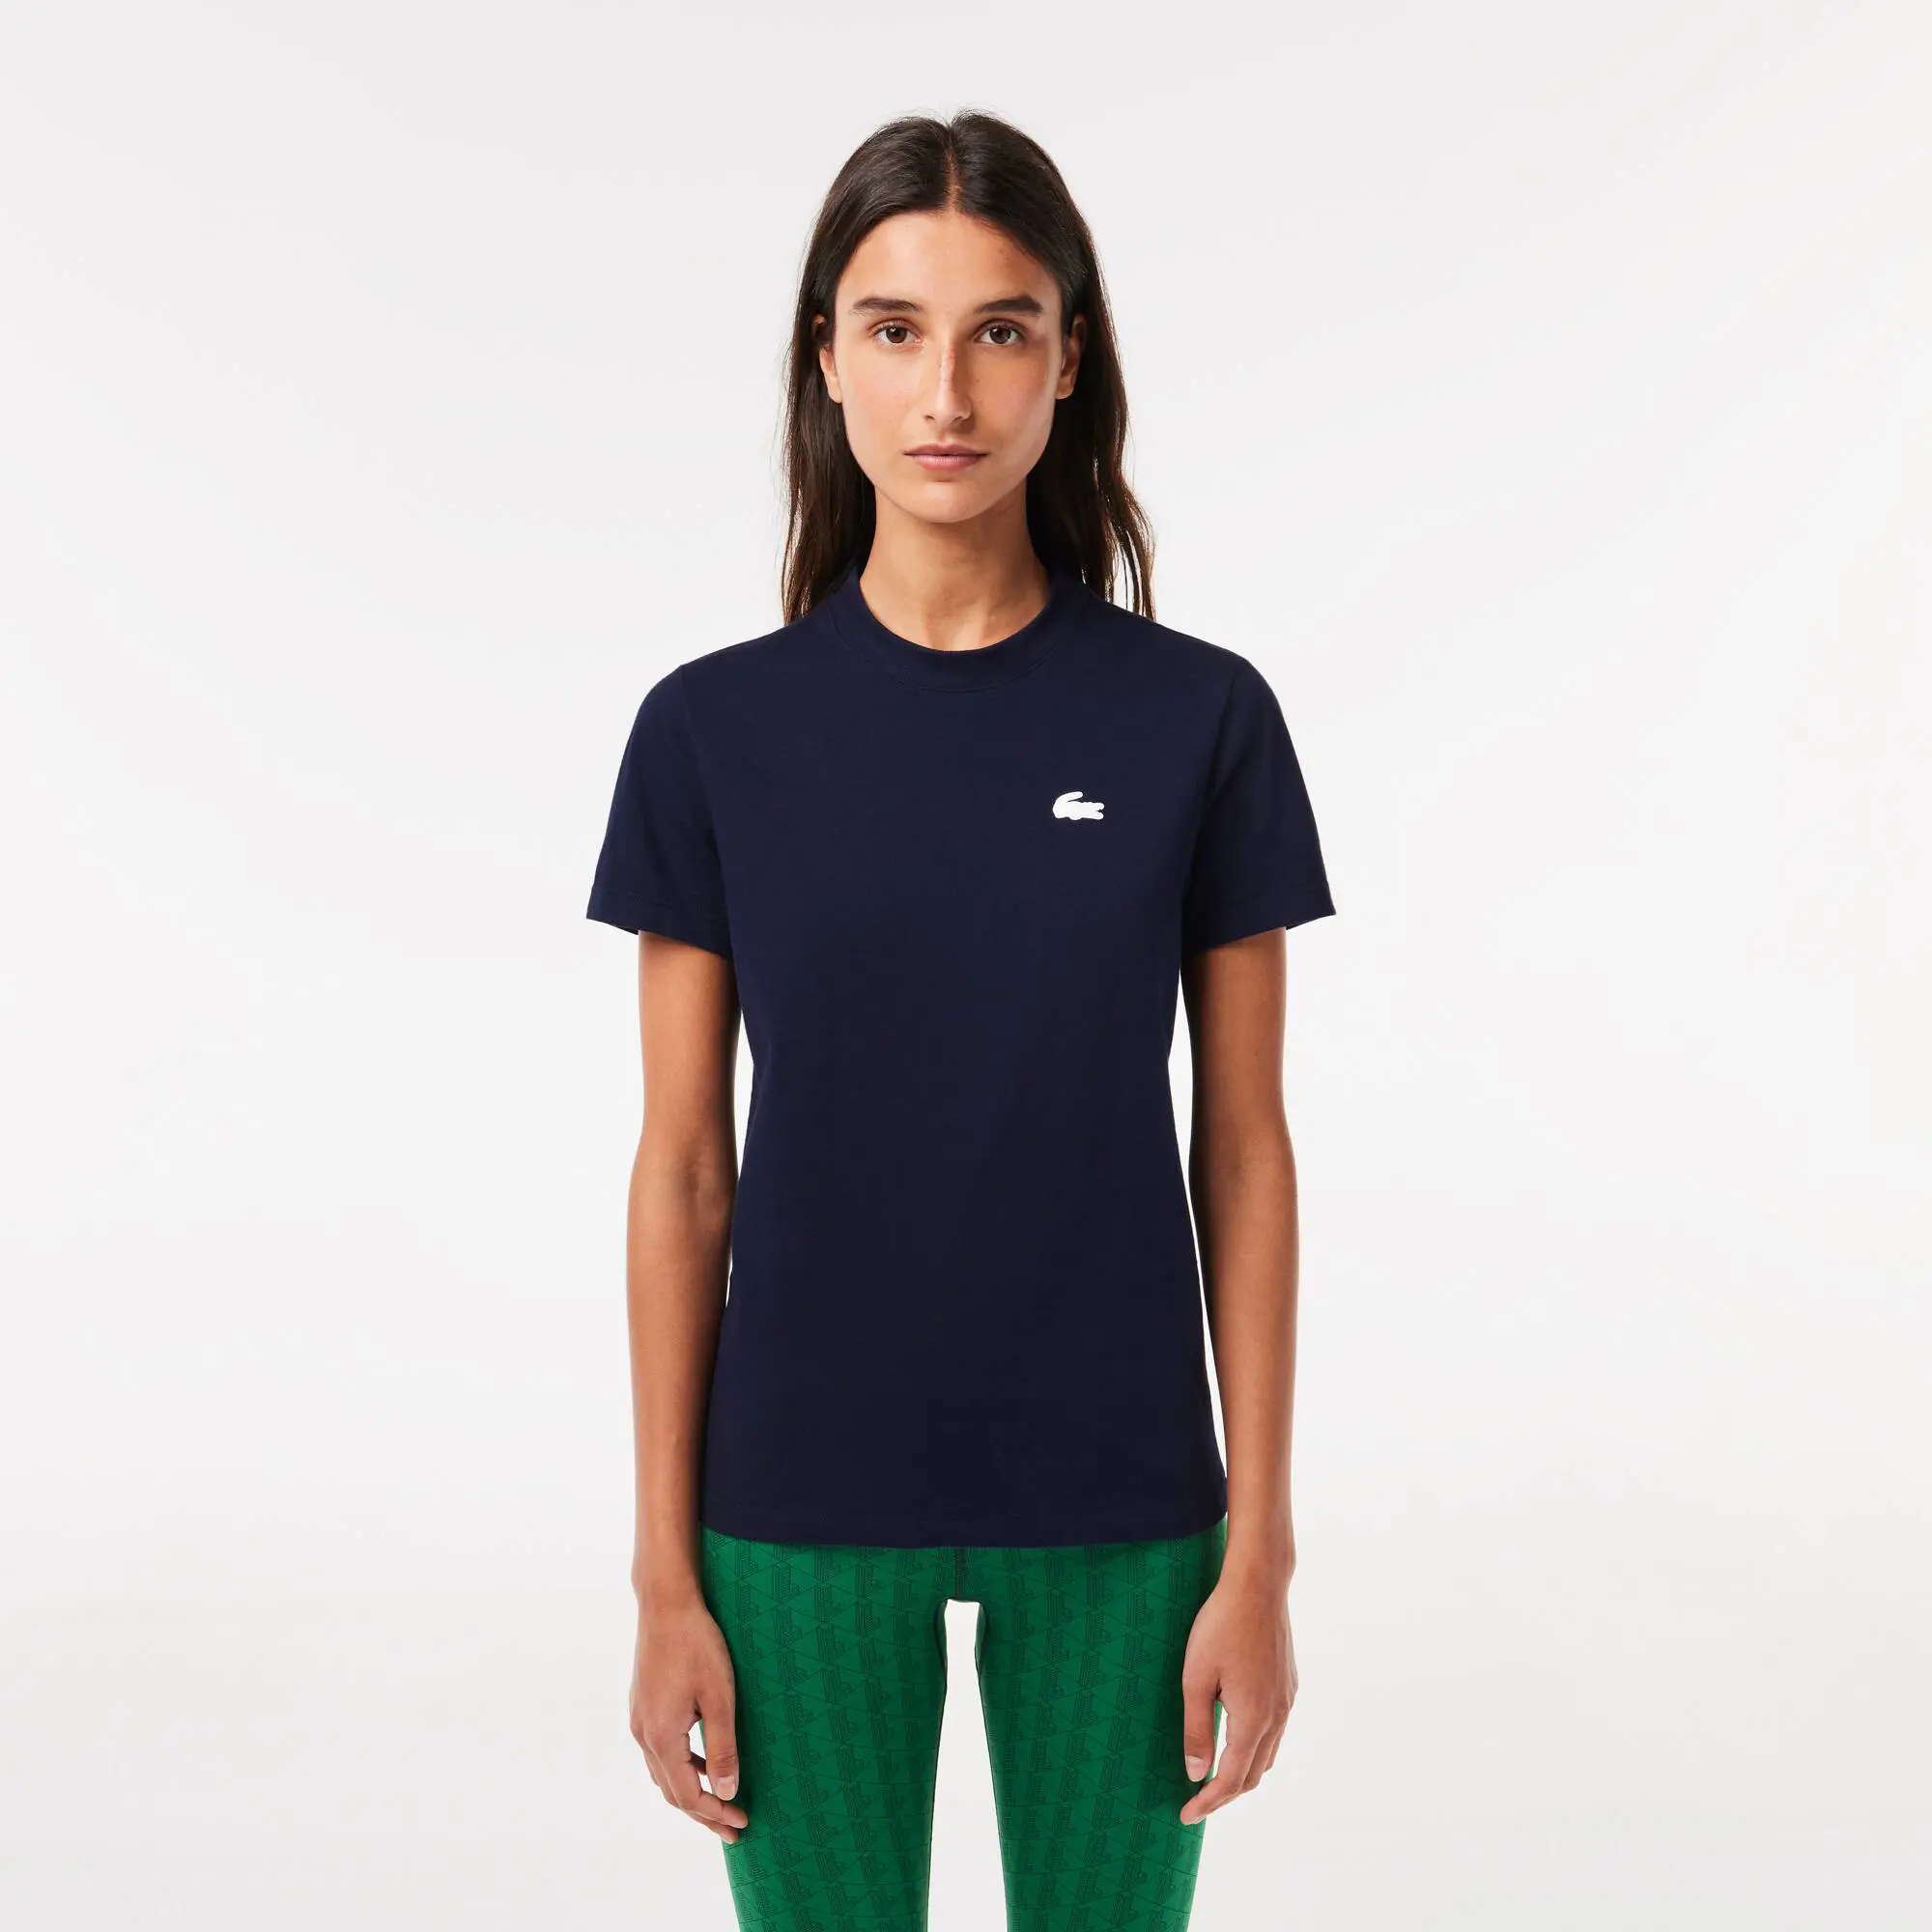 Lacoste Women's Lacoste SPORT Organic Cotton Jersey T-Shirt. 1